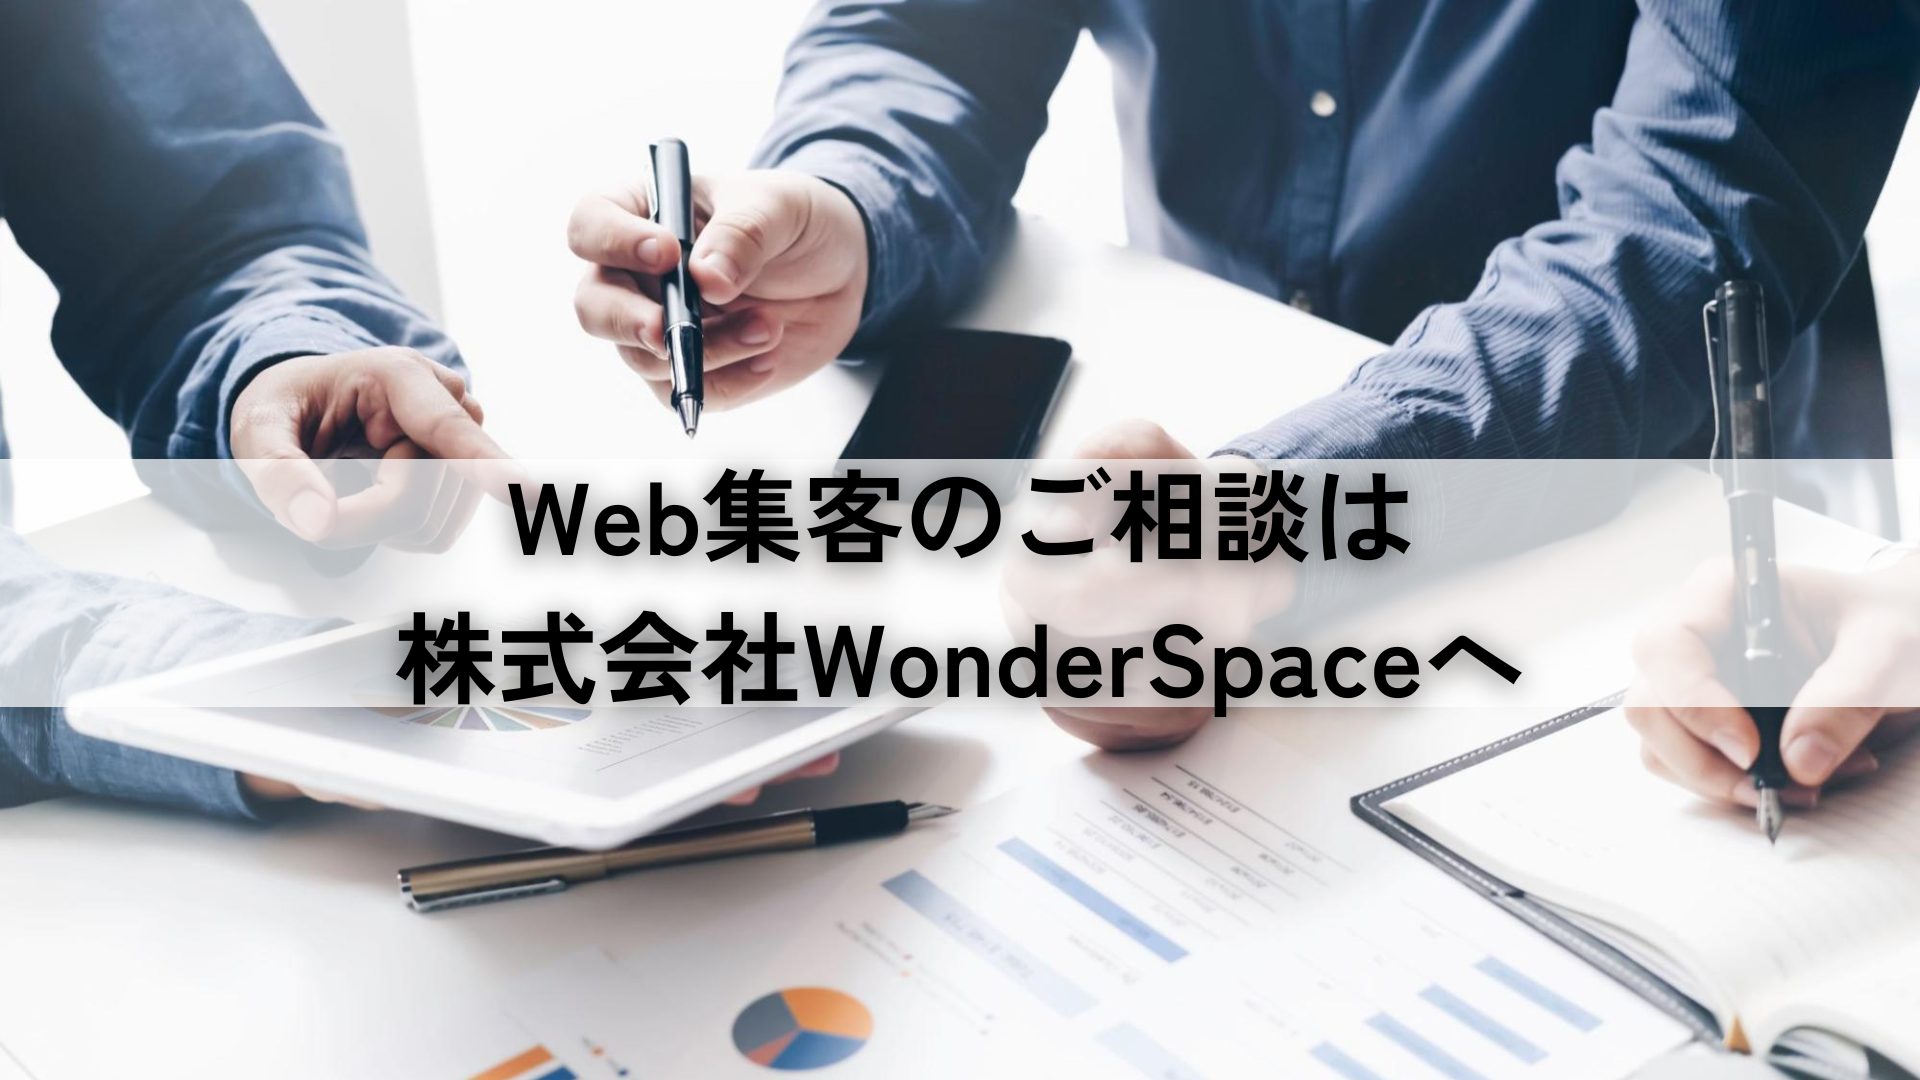 Web集客のご相談は株式会社WonderSpaceへ